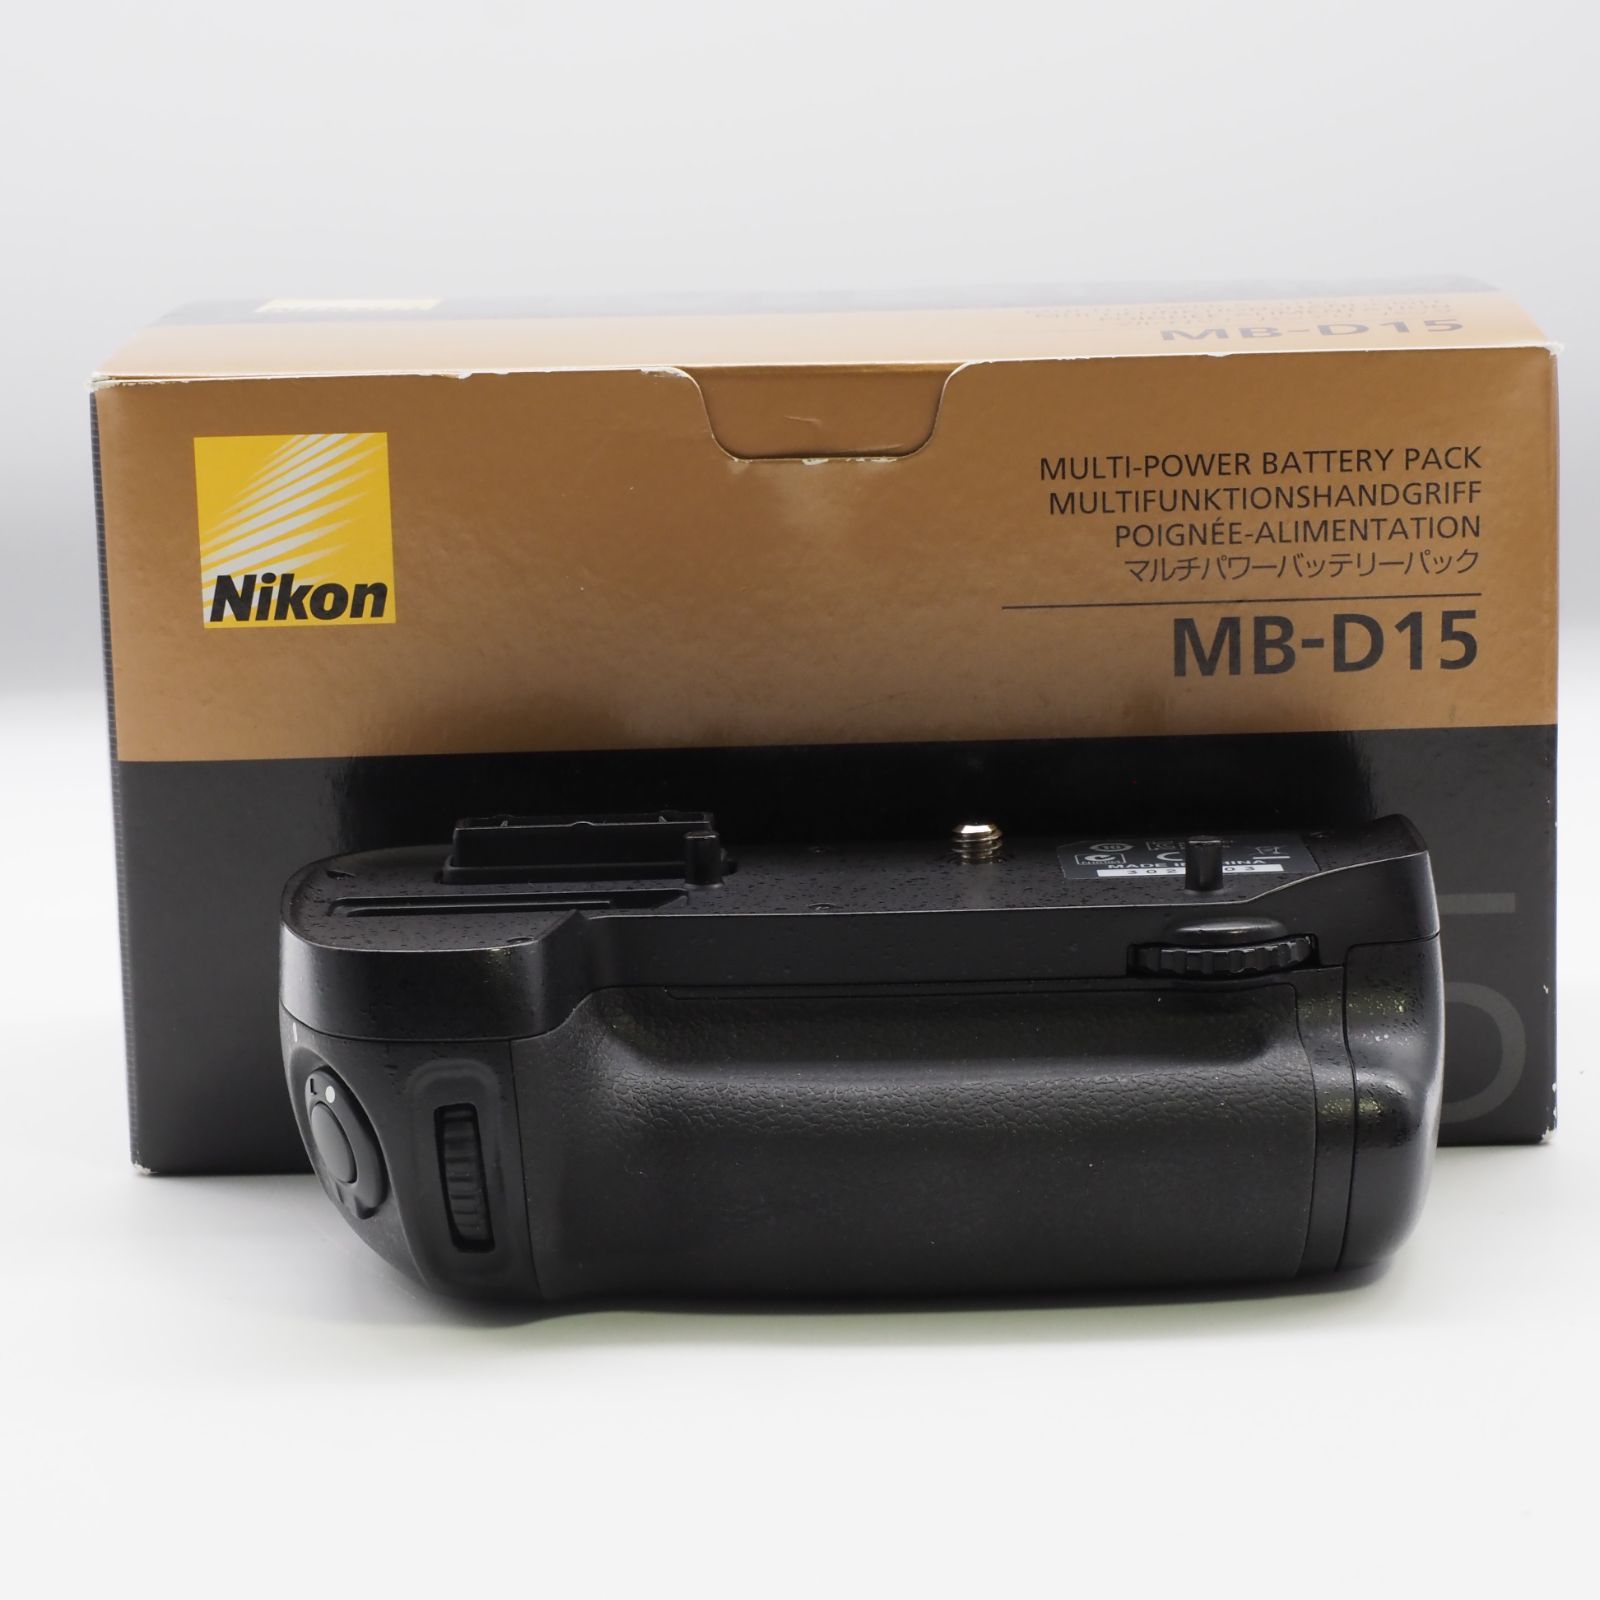 Nikon ニコン マルチパワーバッテリーパック MB-D15 #2858 - cemac.org.ar